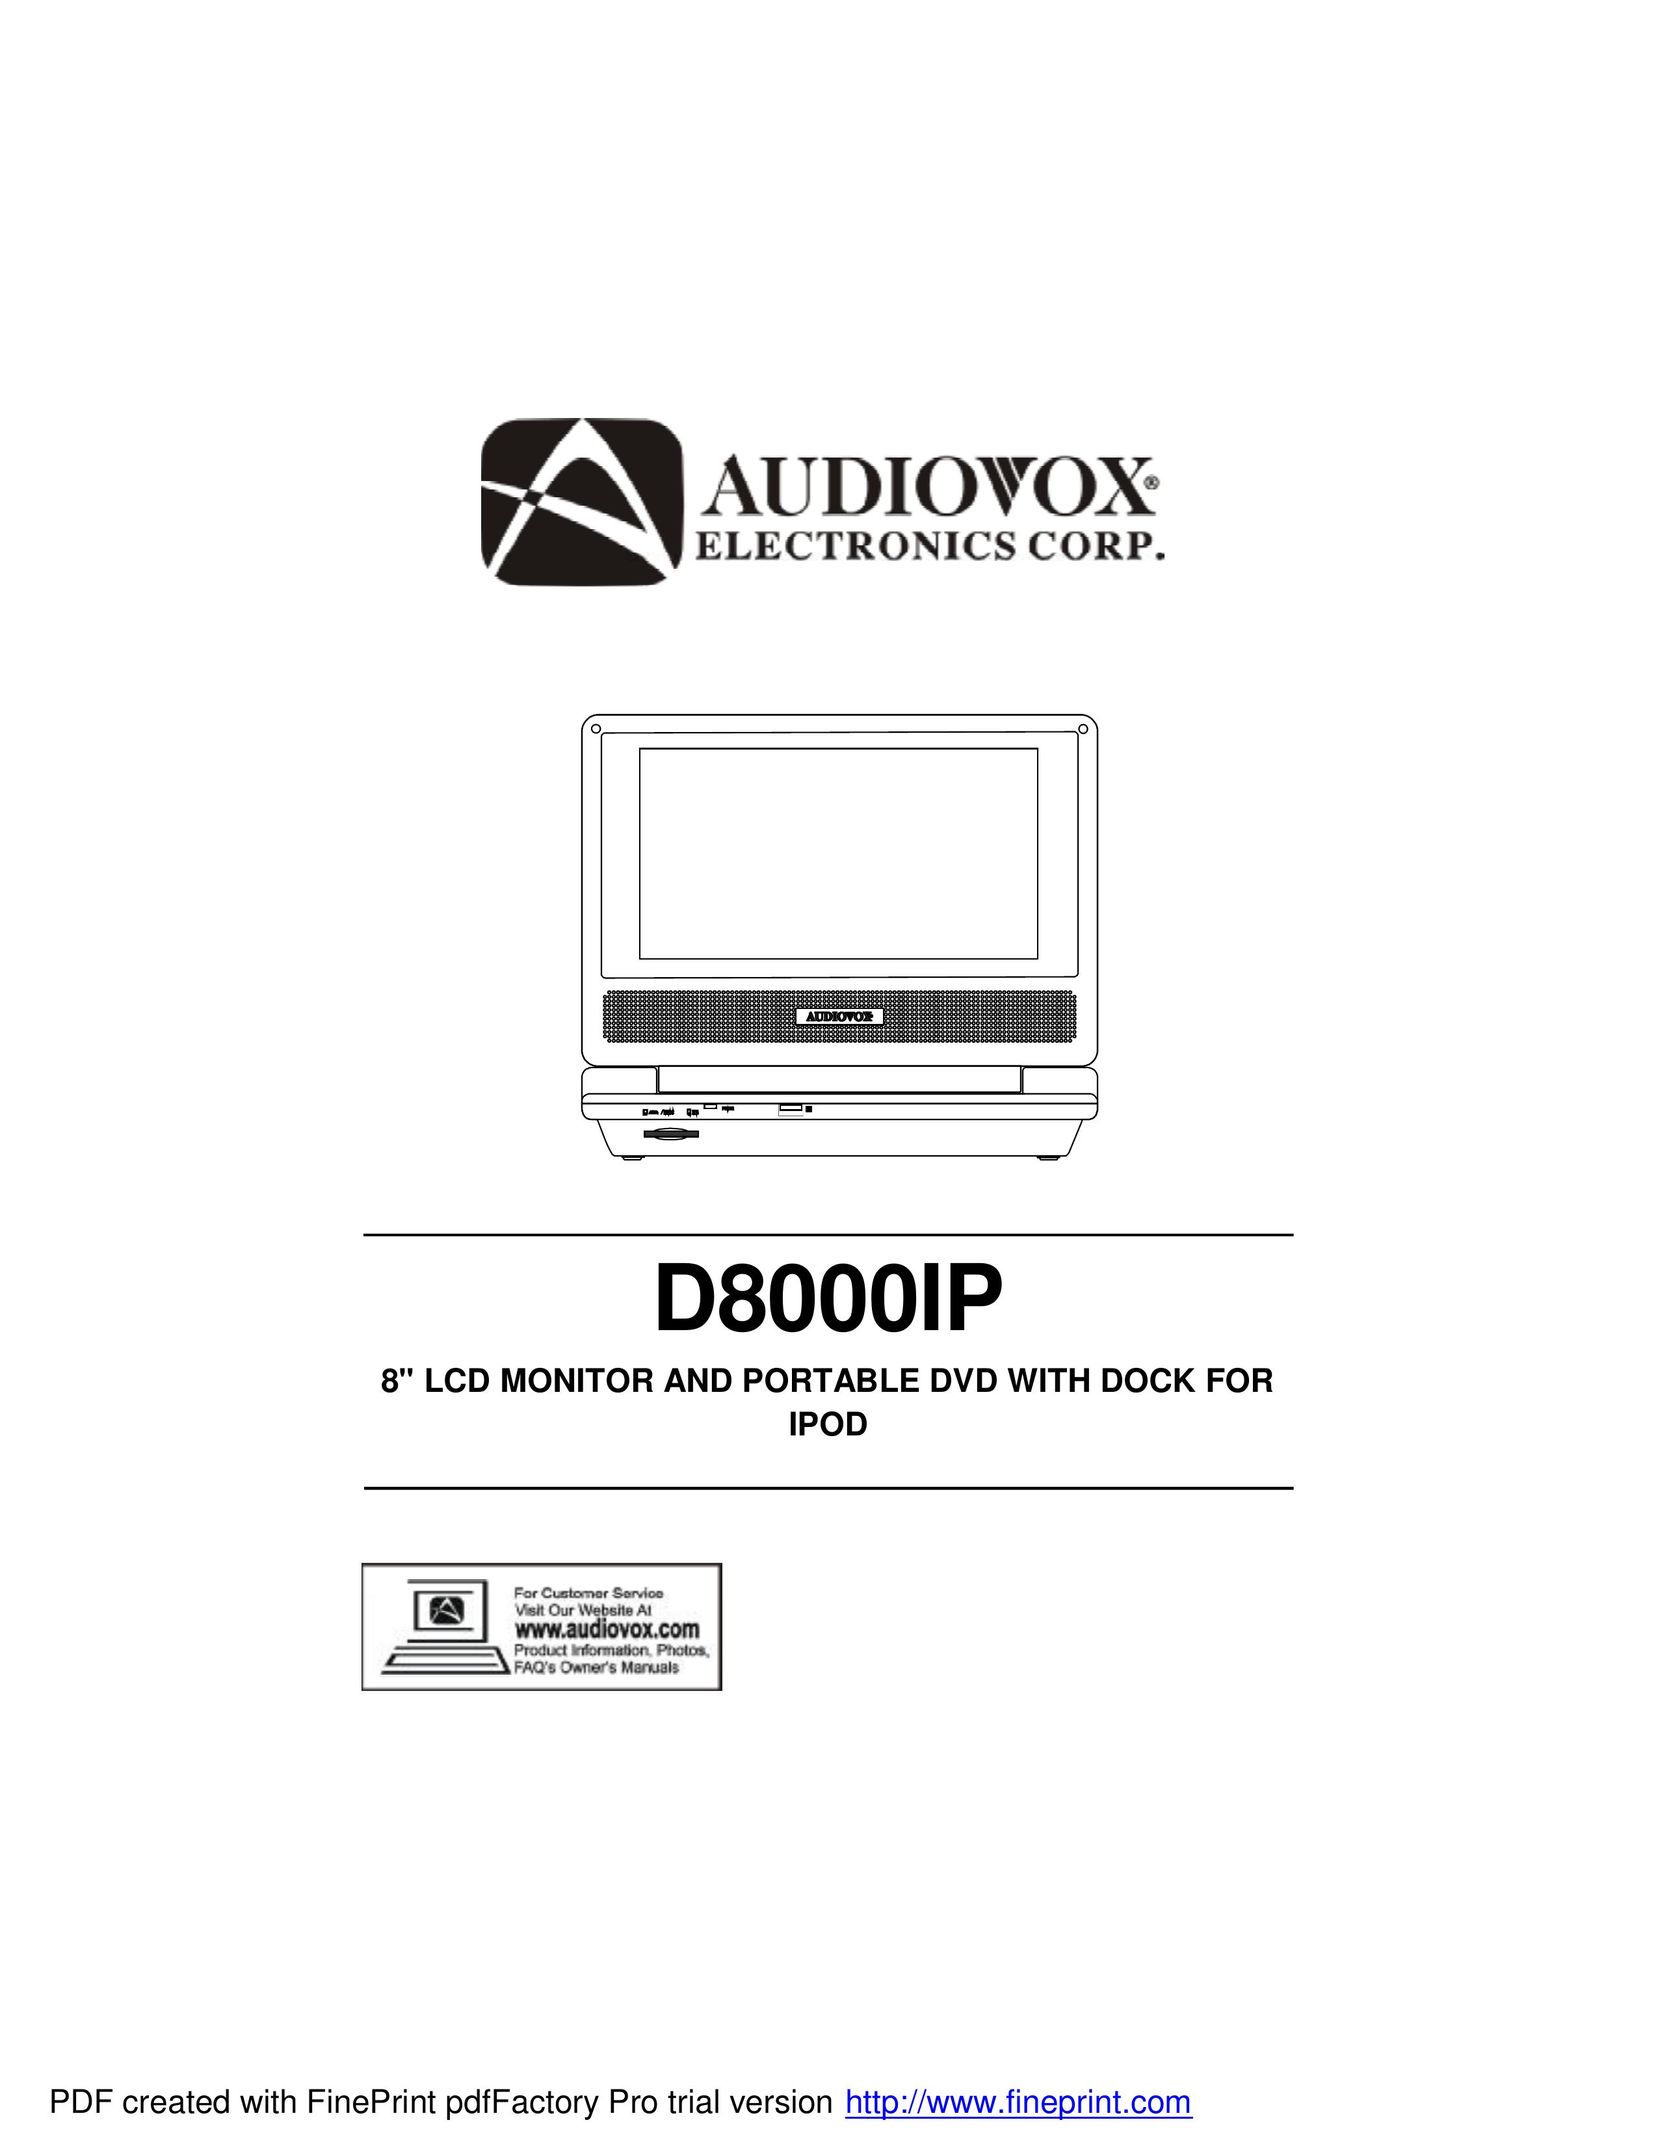 Audiovox D8000IP DVD Player User Manual